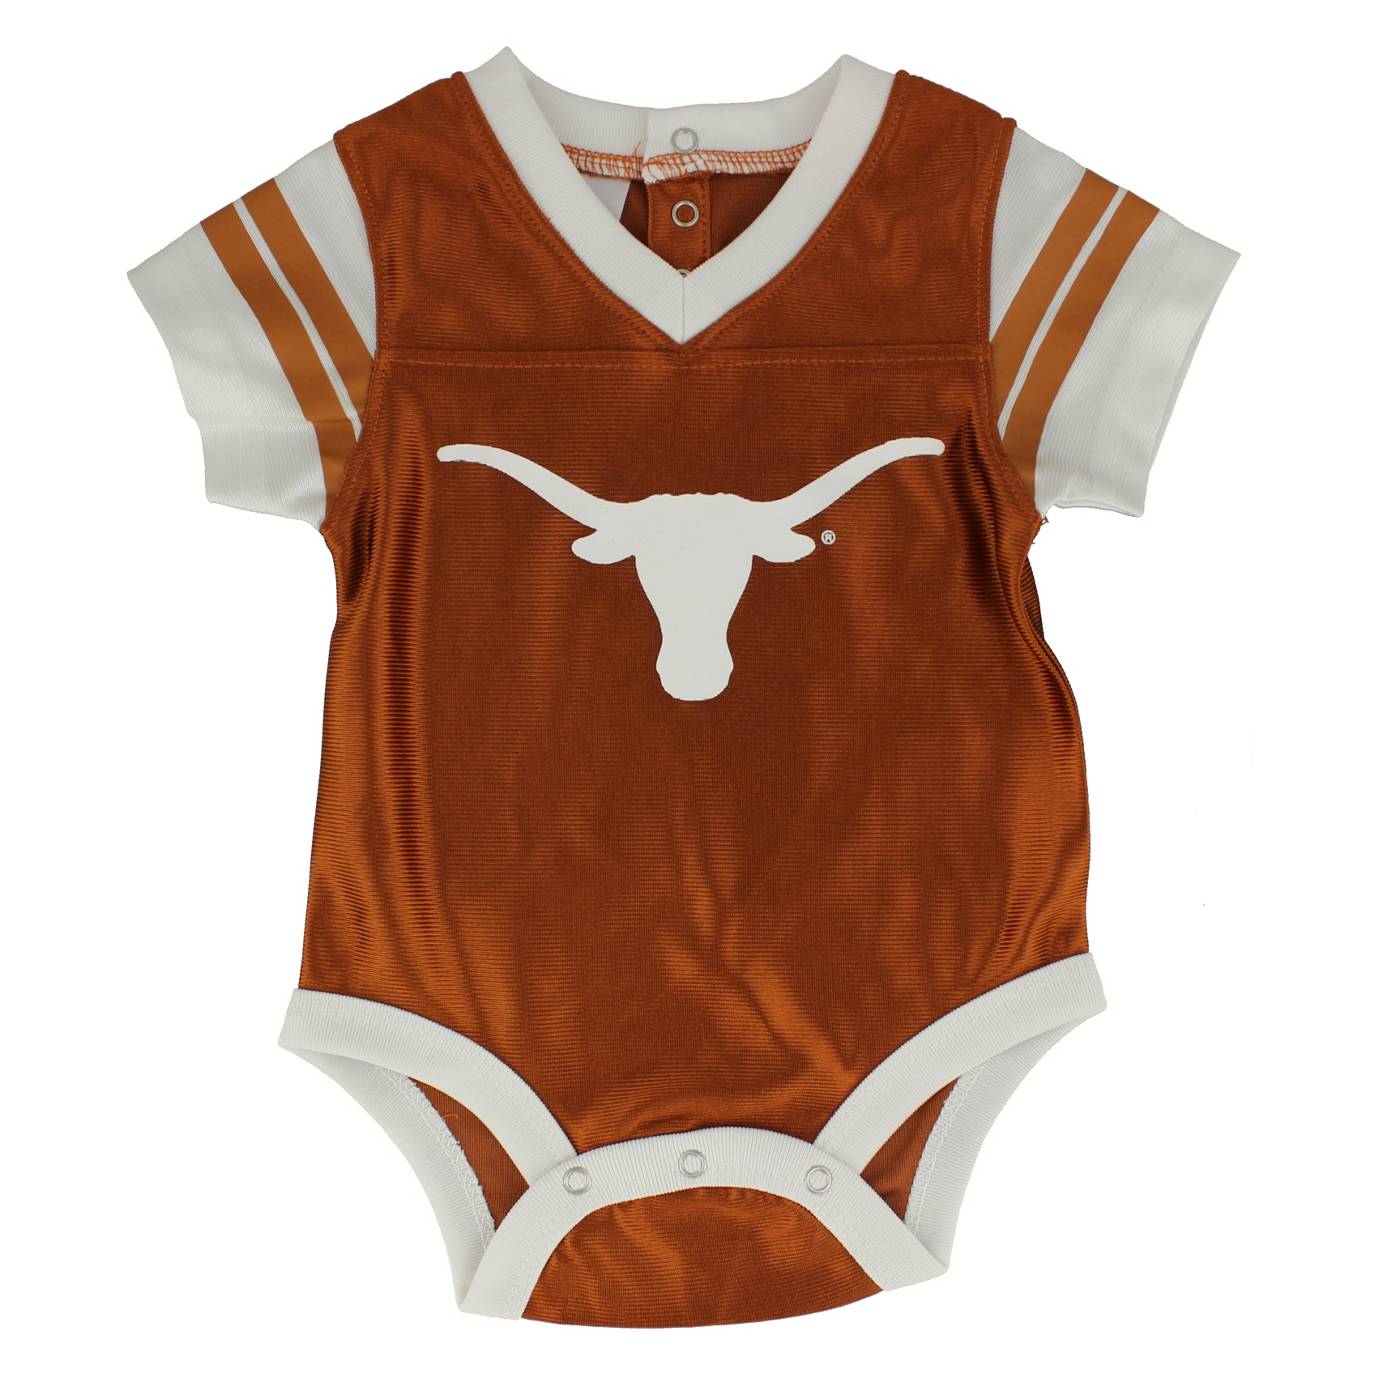 University of Texas Infant Burnt Orange Bodysuit Jersey; image 1 of 2